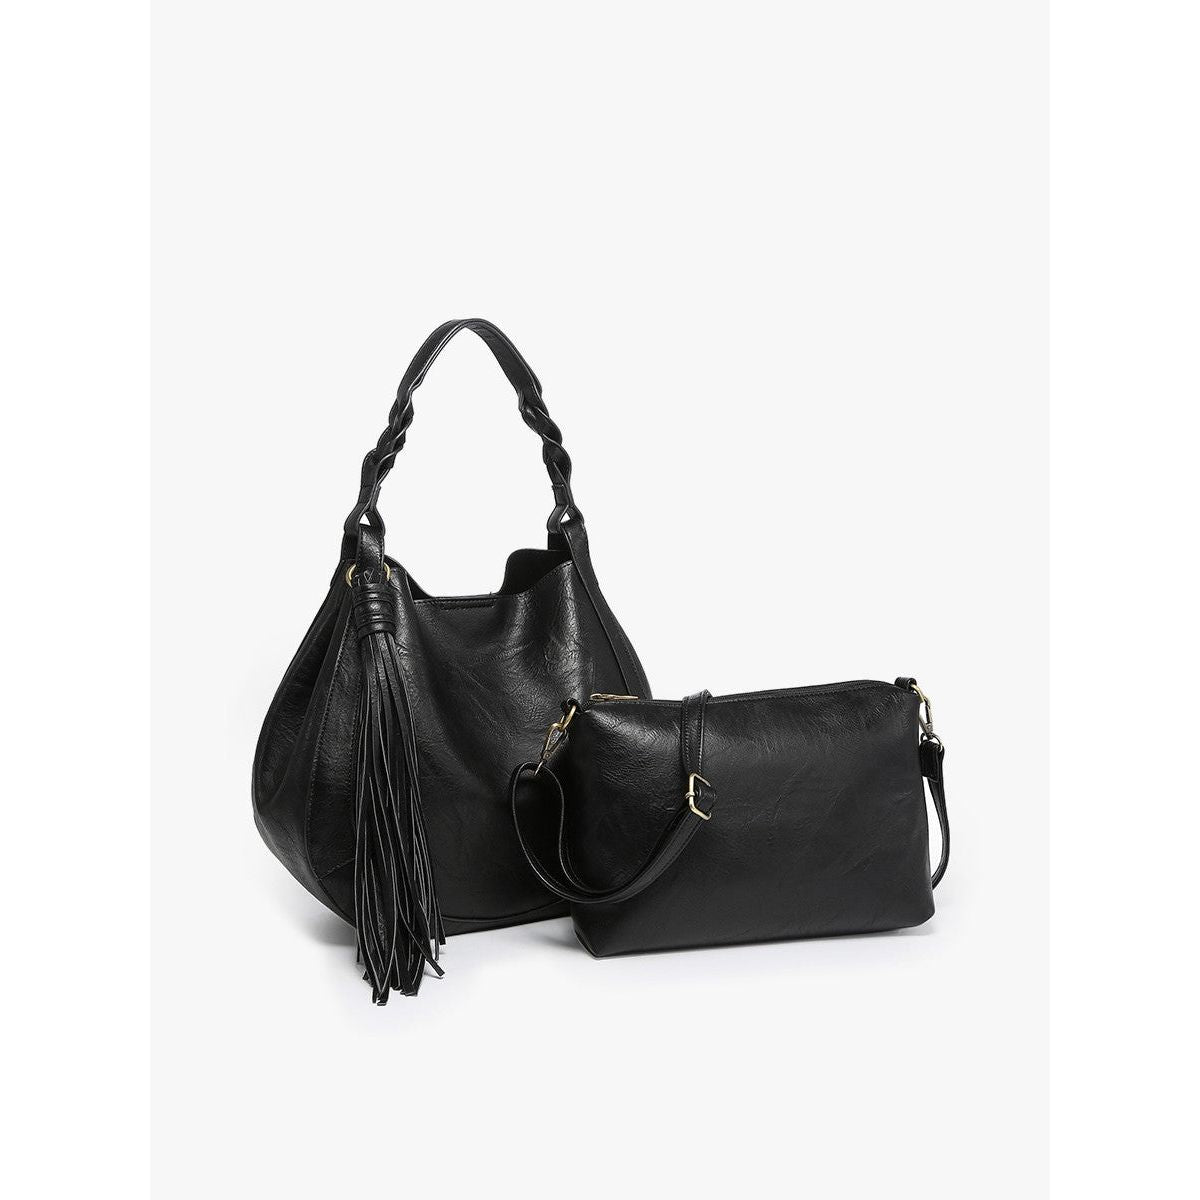 Eloise Handbag in Black